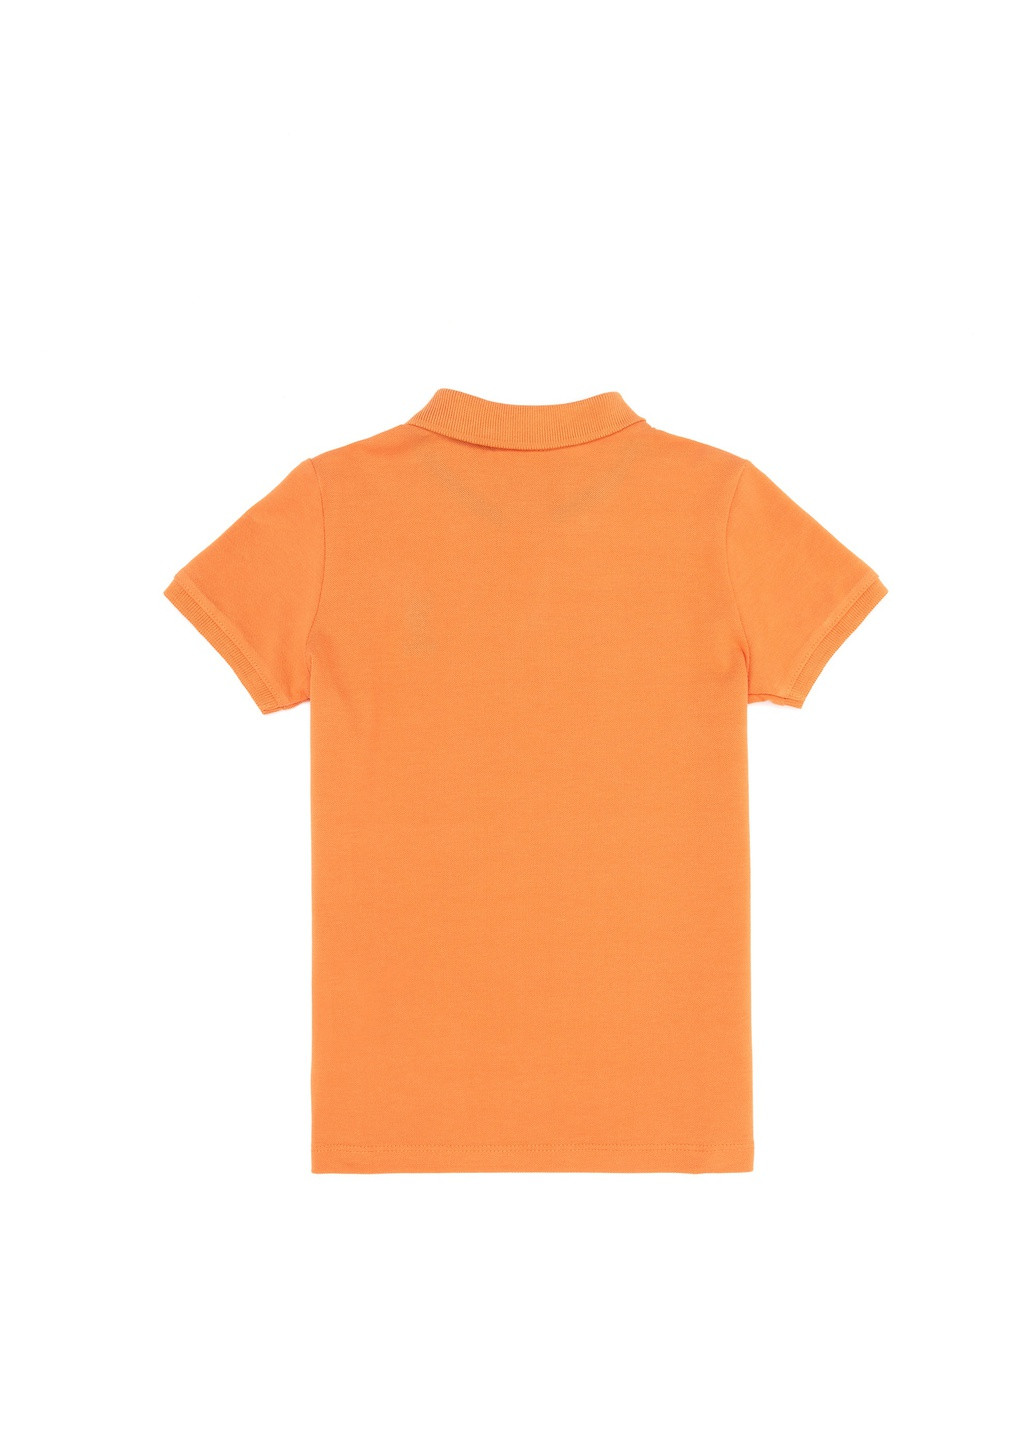 Оранжевая футболка поло u.s.polo assn на мальчика U.S. Polo Assn.